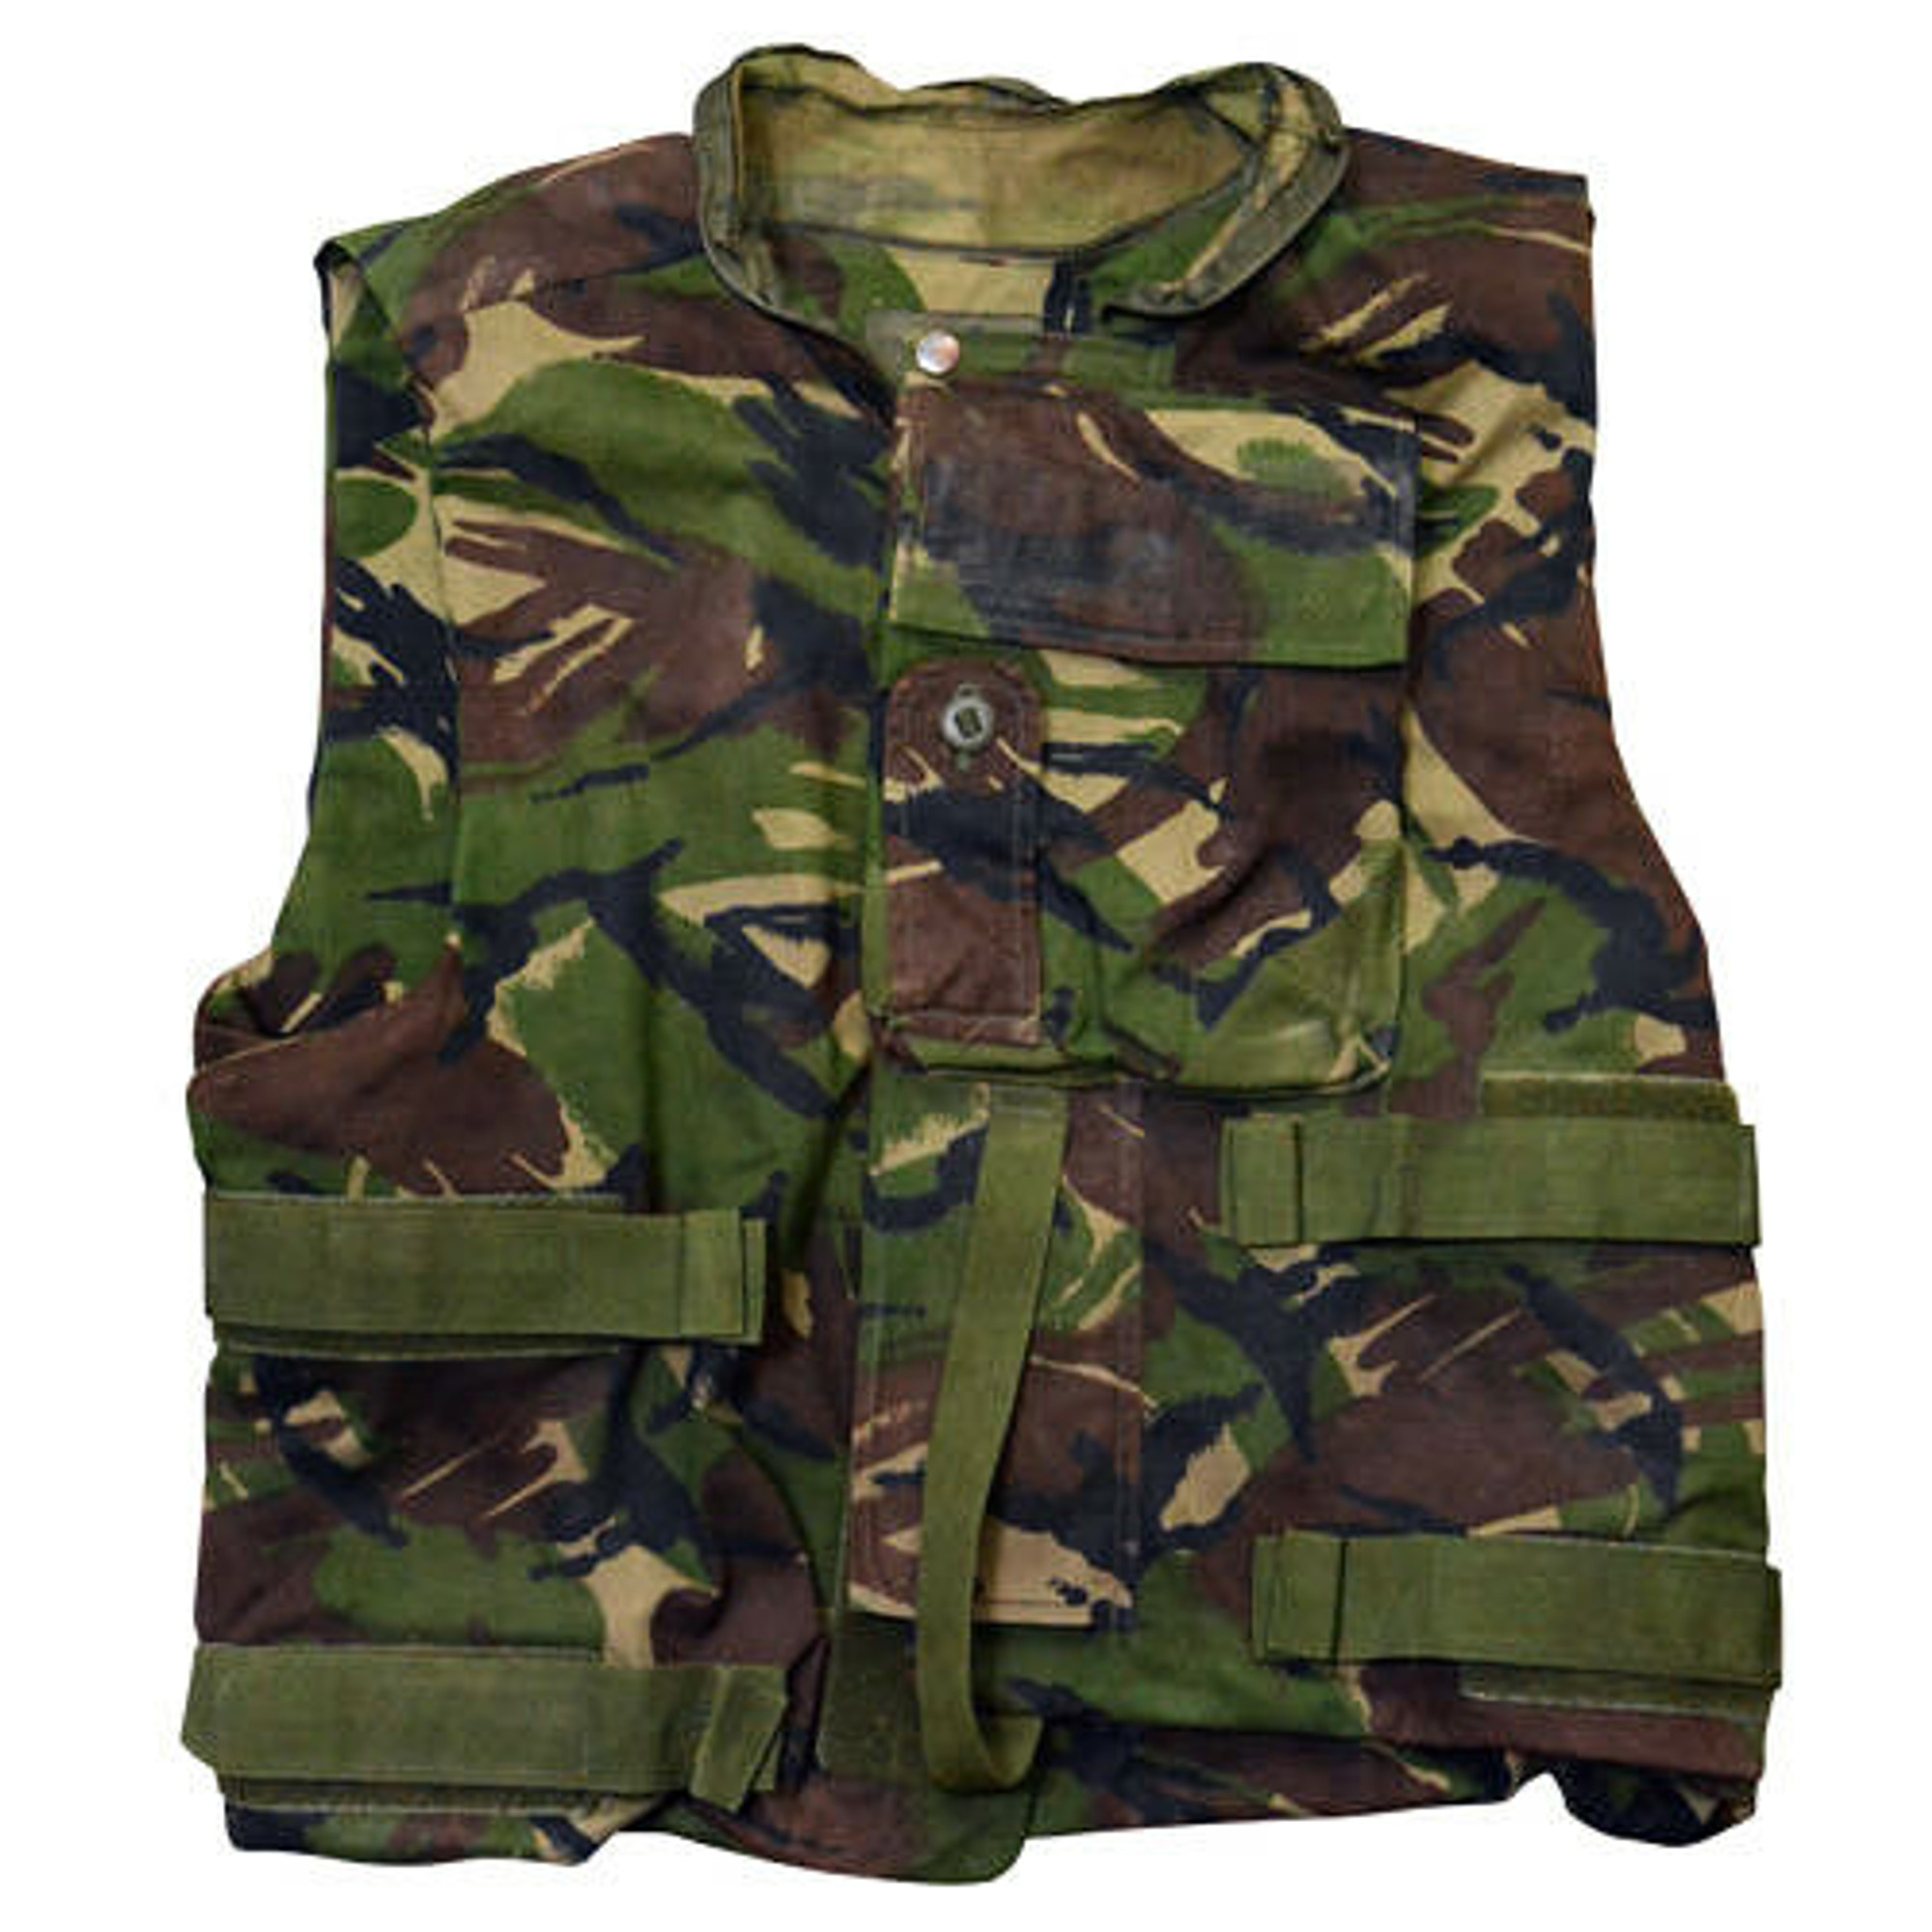 British Military Issue Anti-Fragmentation Cover Vest